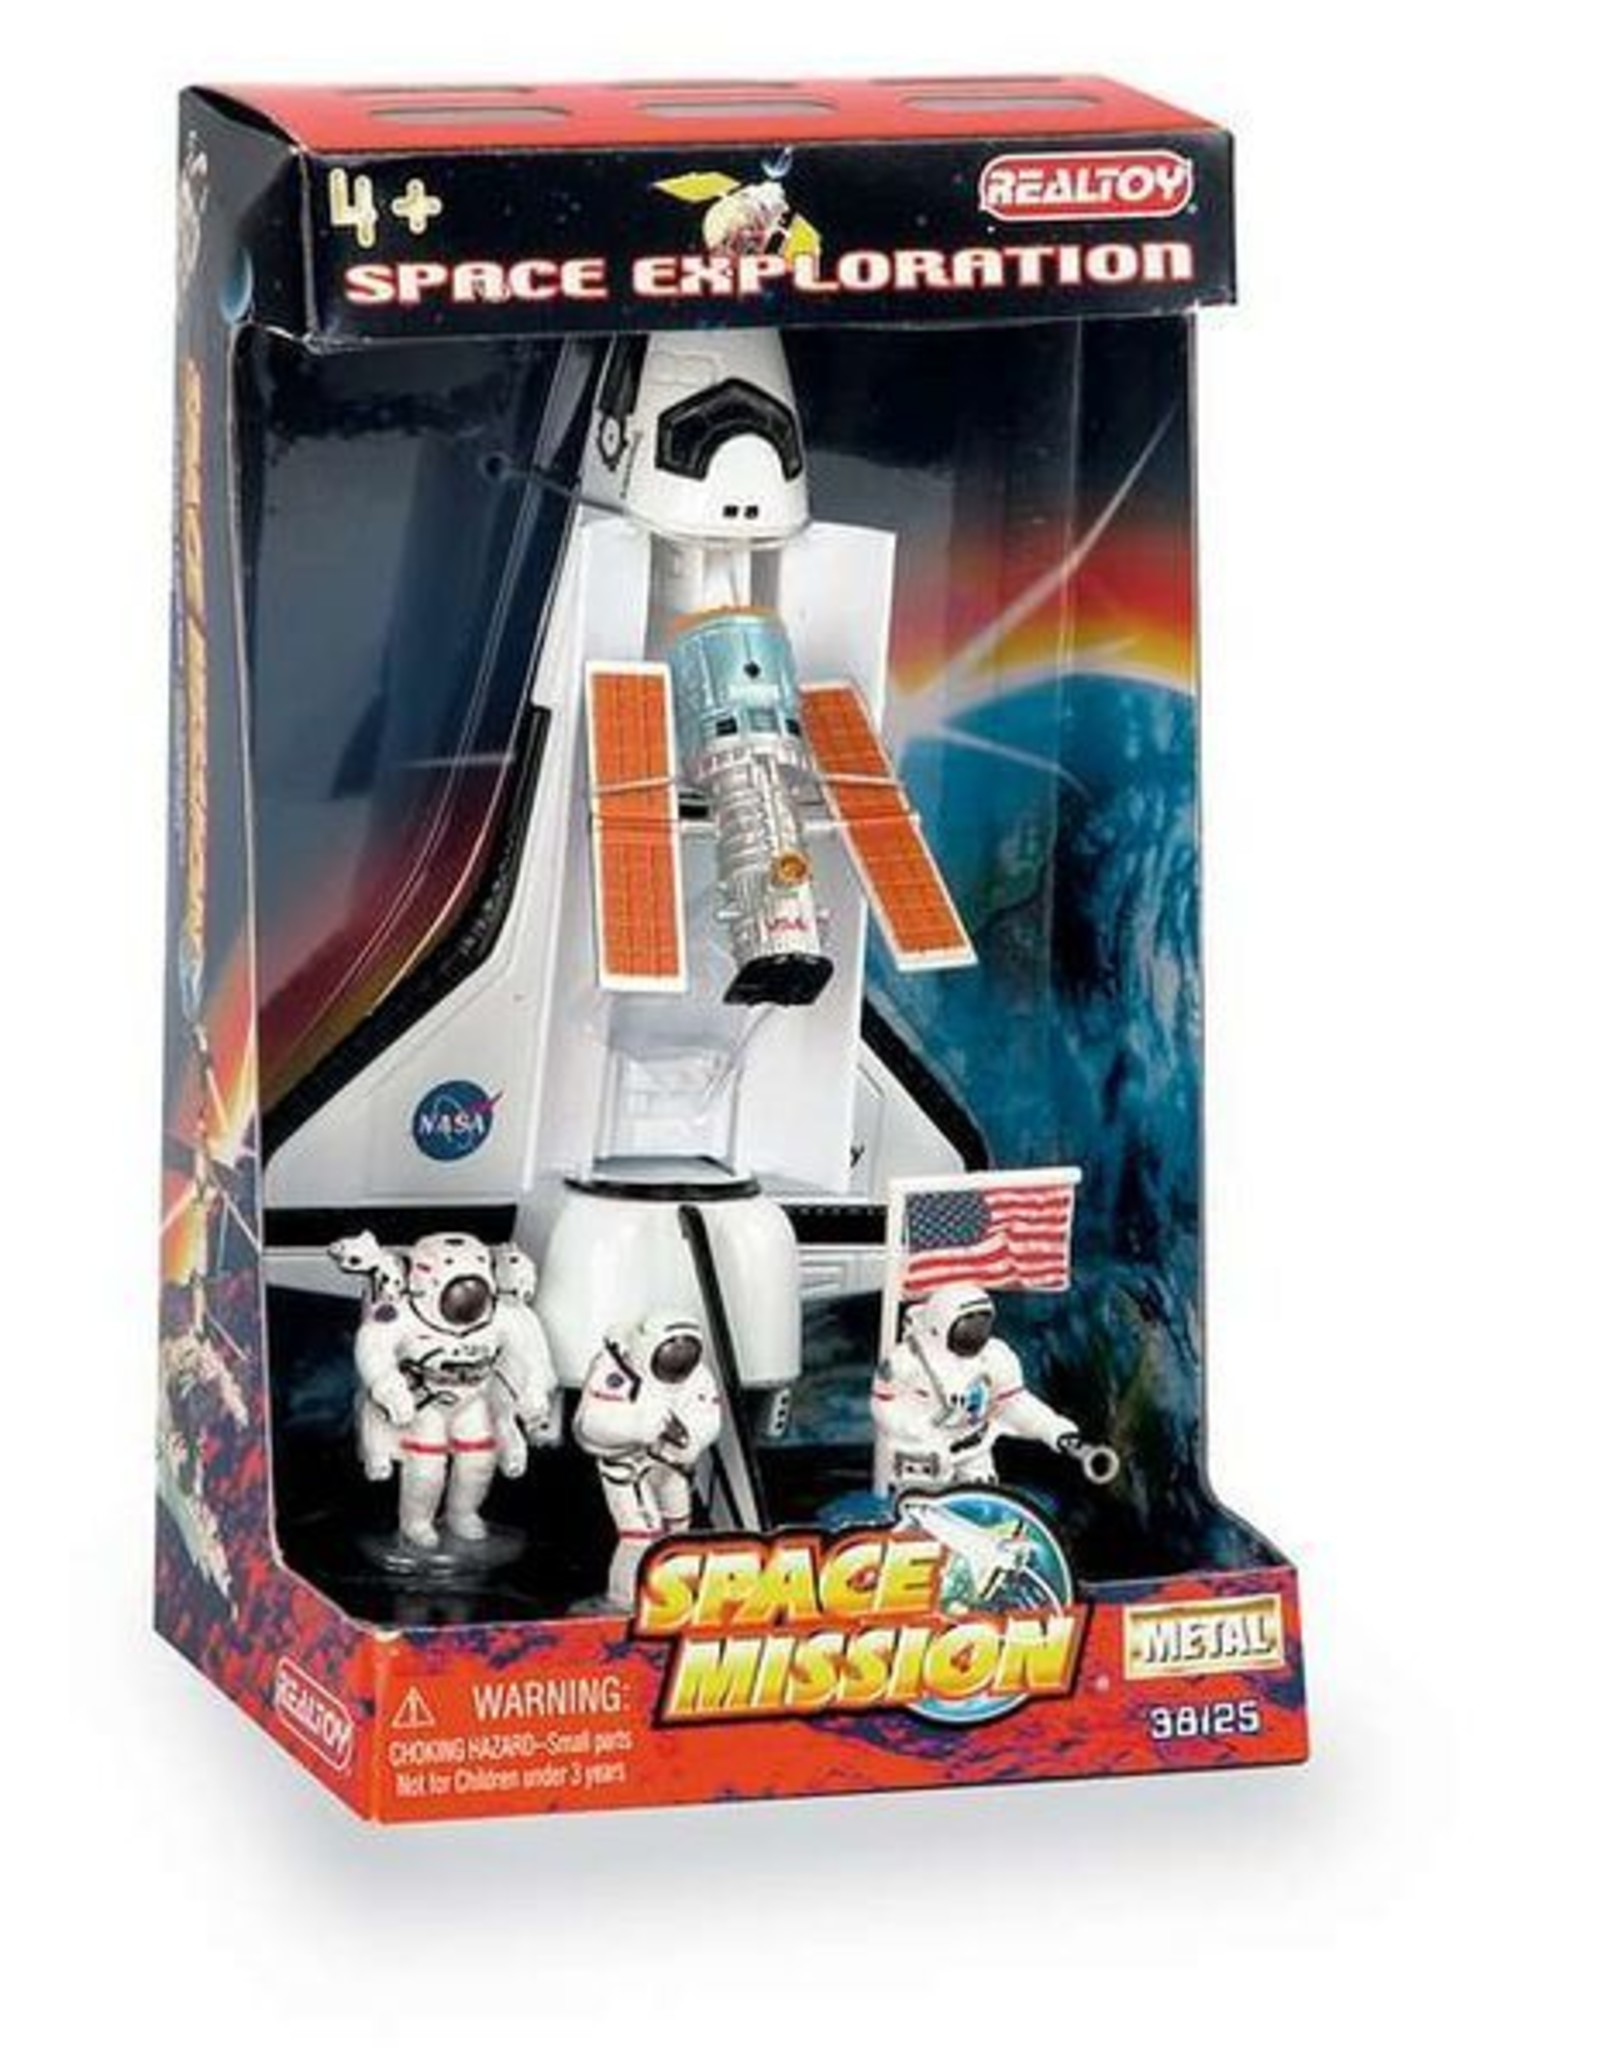 Action City Space Mission Space Shuttle Set (single)